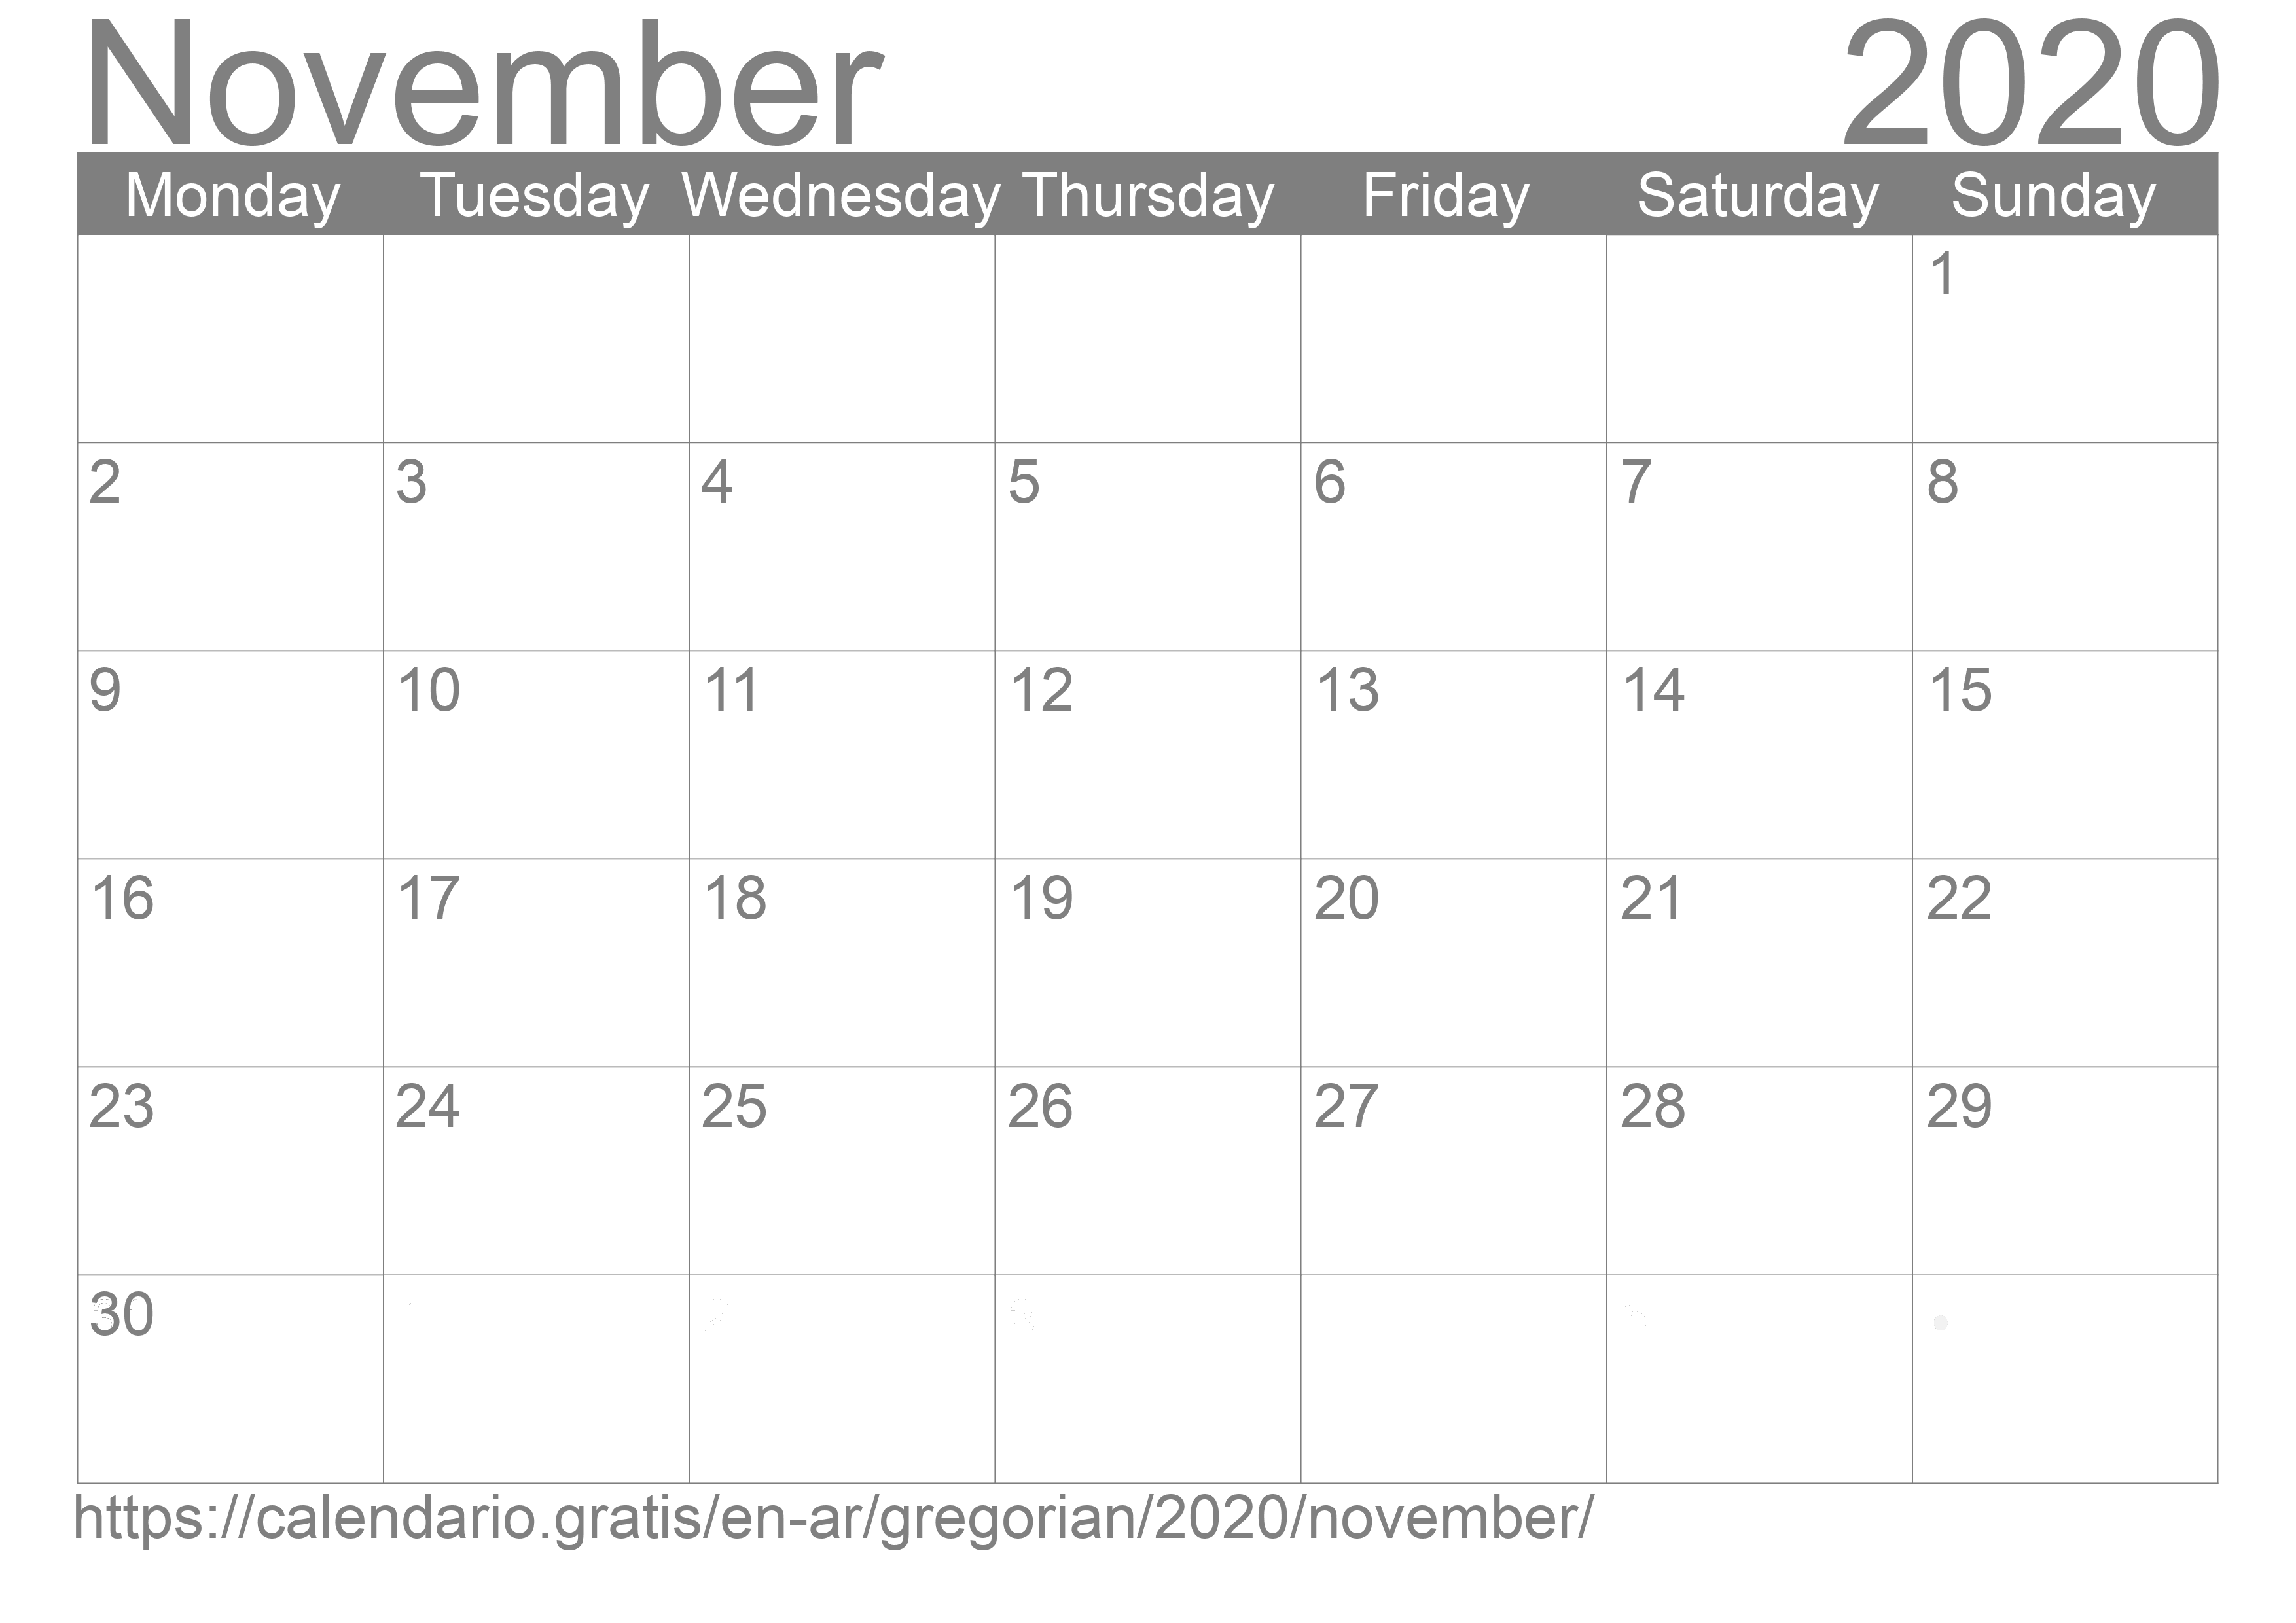 Calendar November 2020 to print